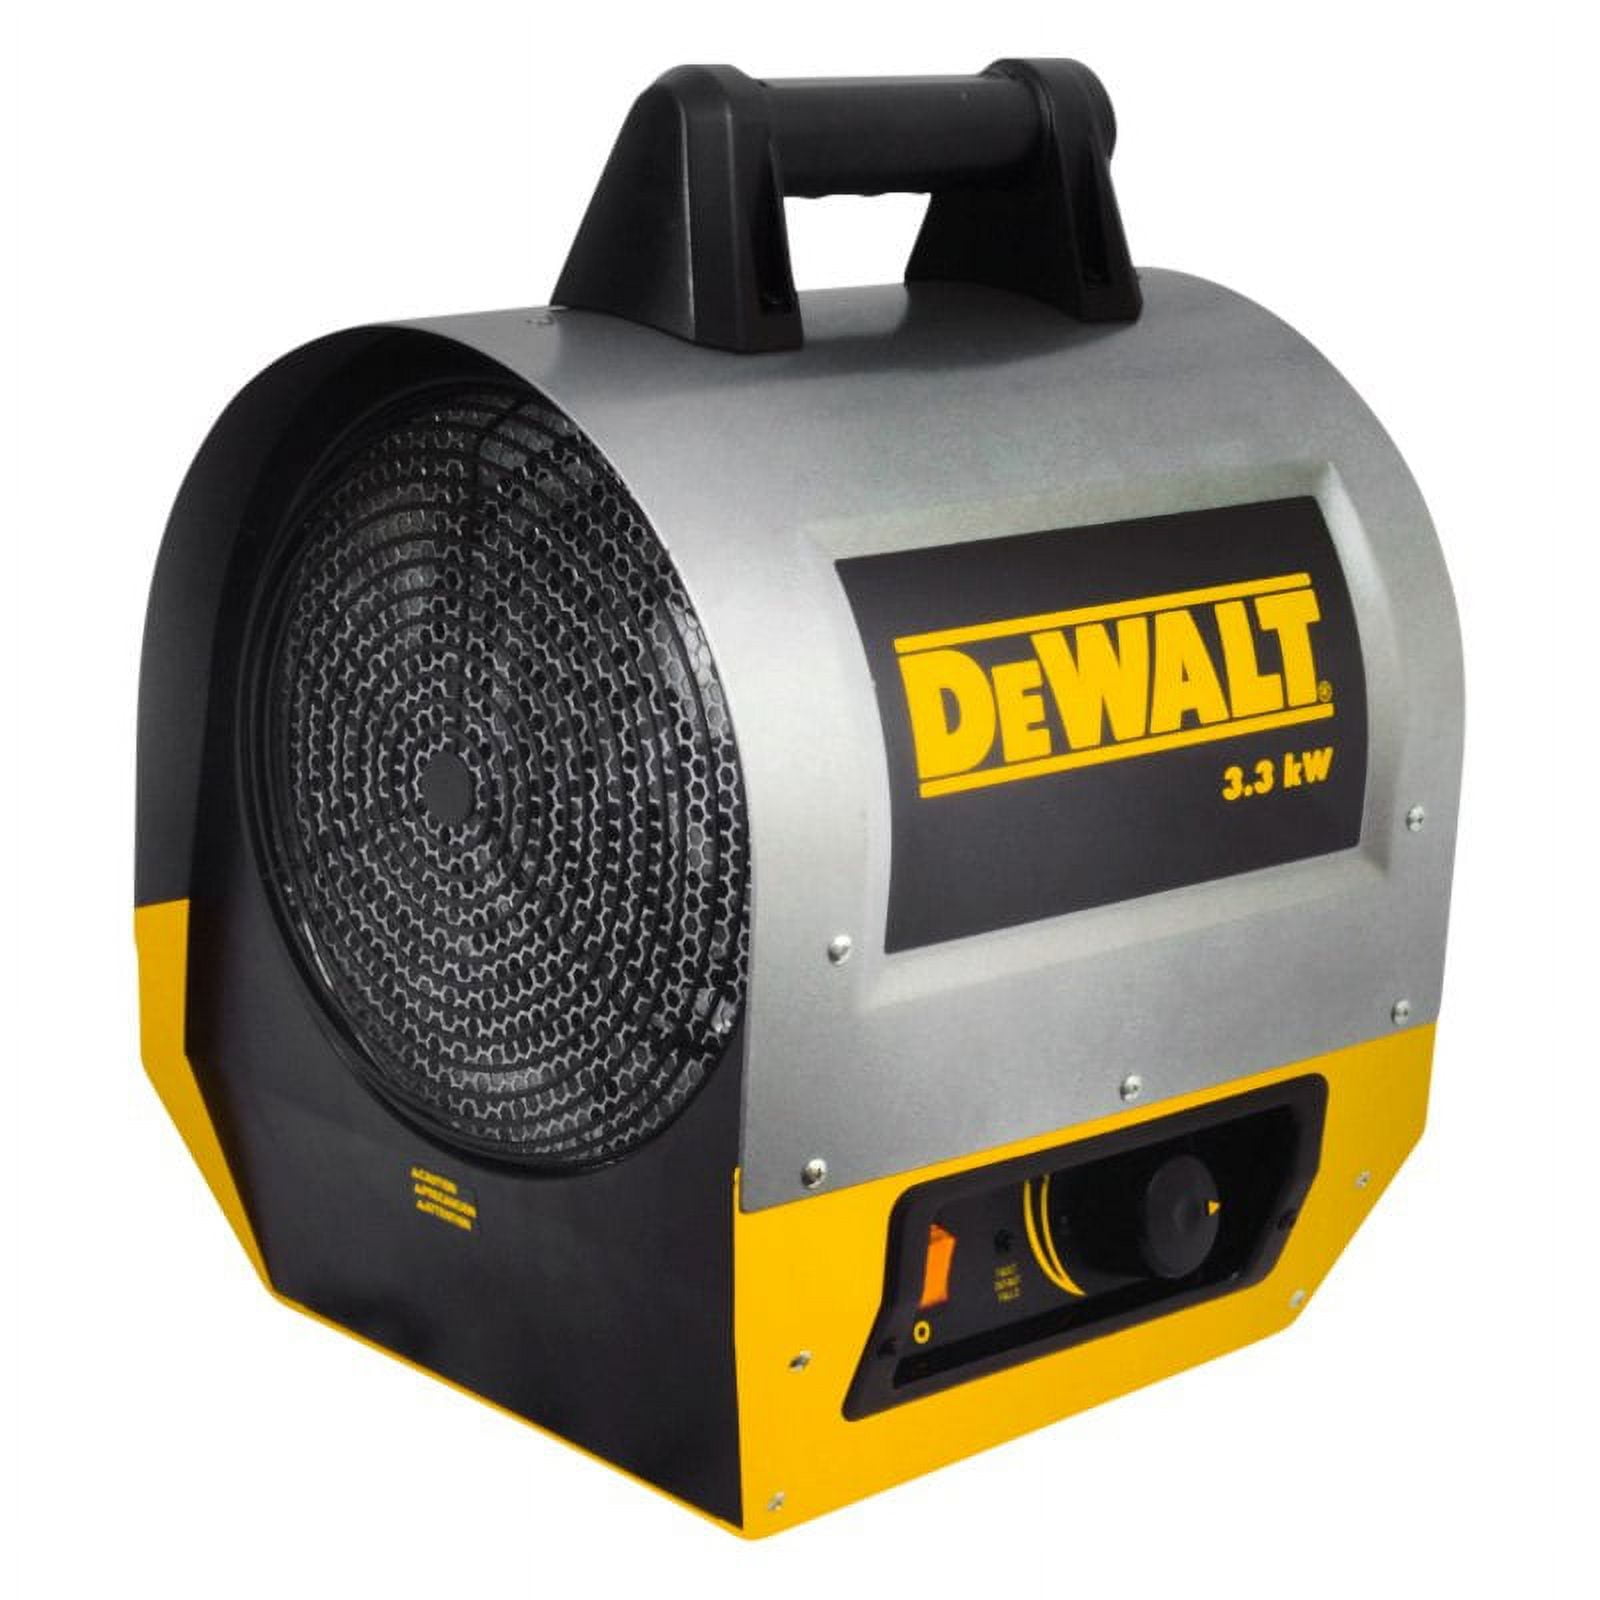 DEWALT Forced Air Kerosene Multi-fuel Construction Heater at